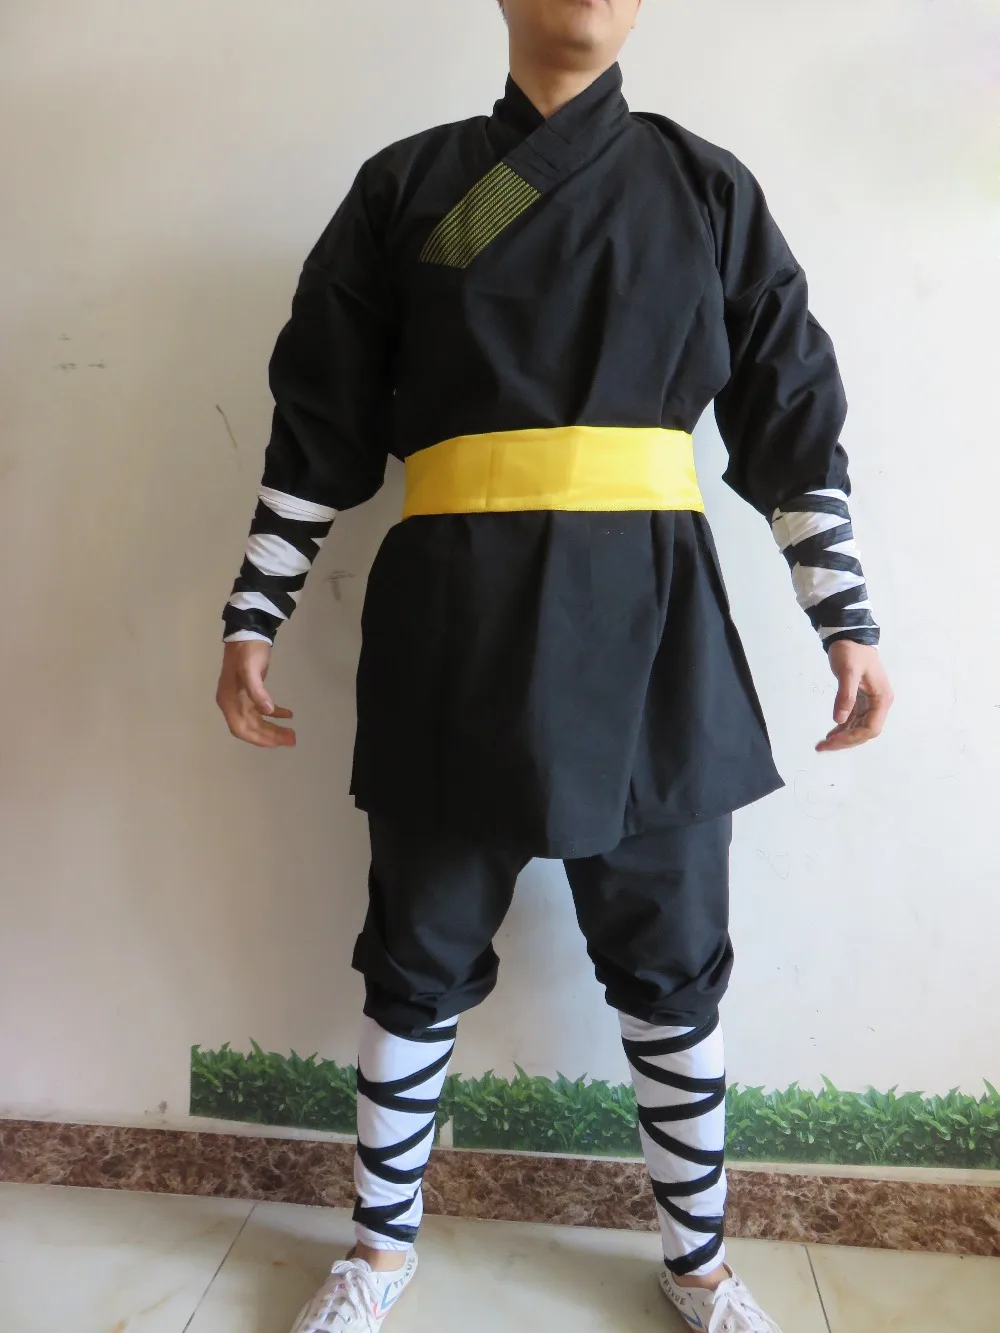 hot Tunic Shaolin Kung Fu Buddhist meditation clothing martial arts uniforms 